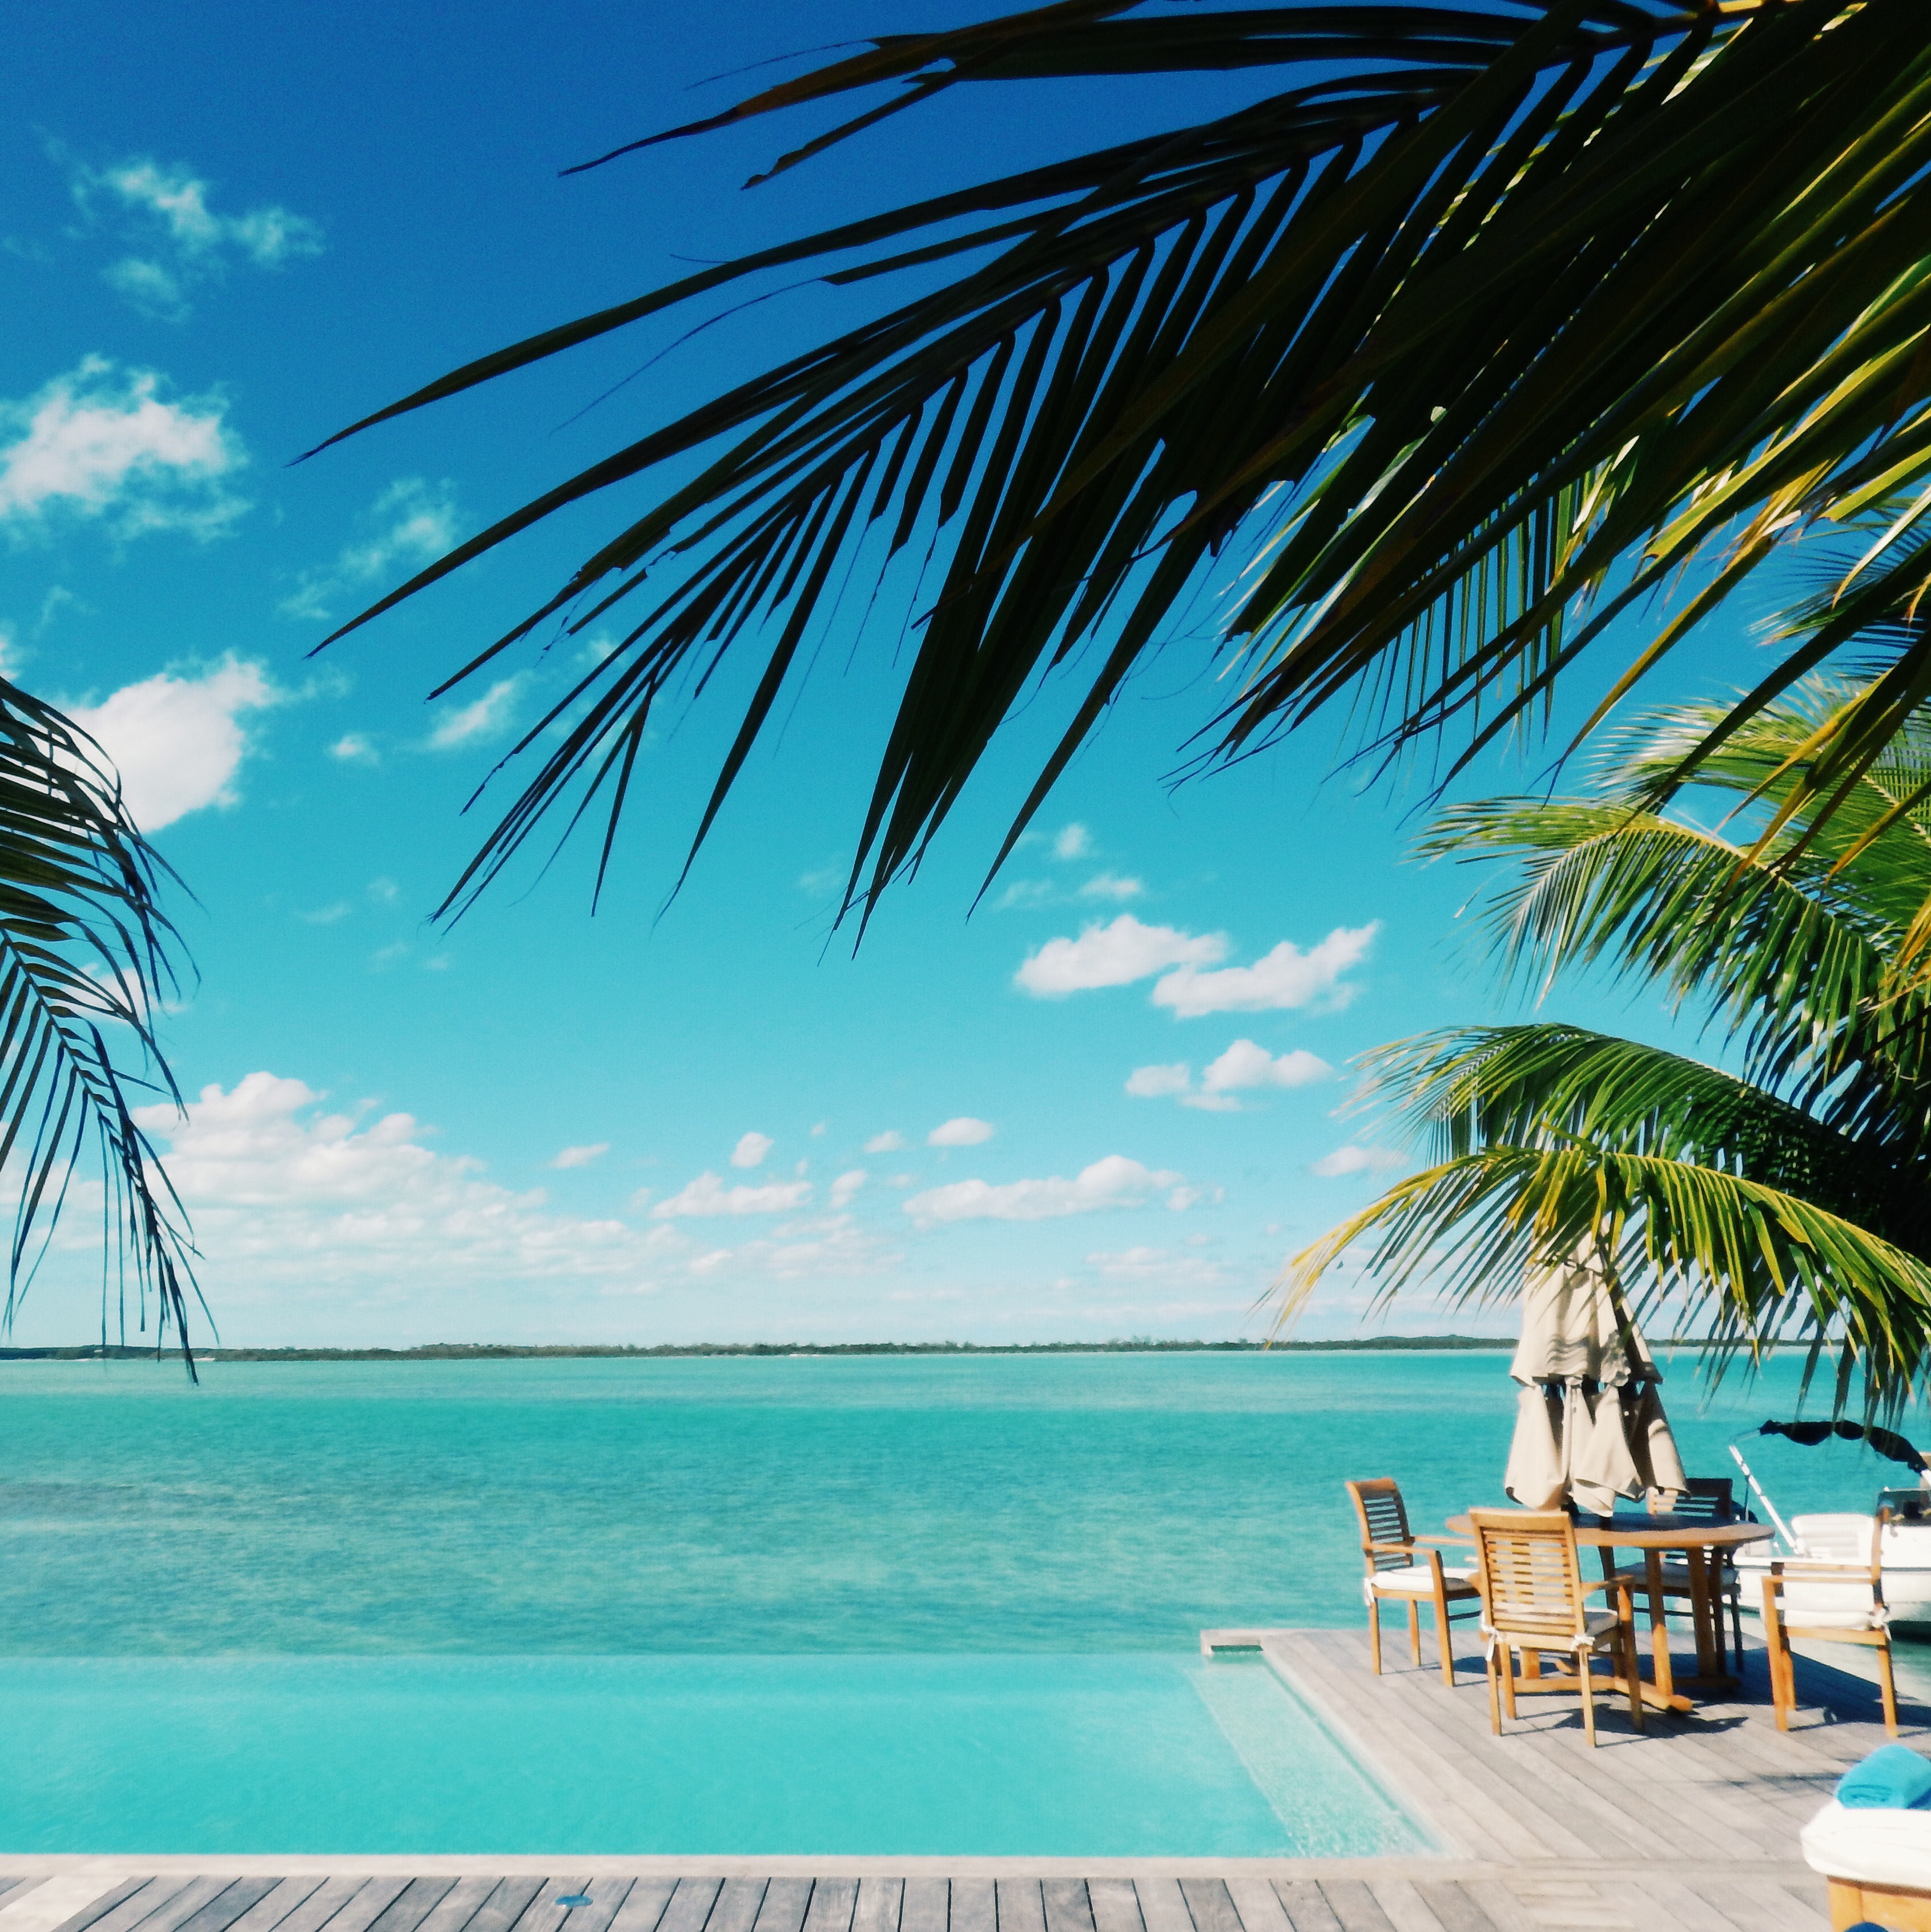 Turquoise Cay | Traveling to The Exumas, Bahamas | Guide to Exumas, Bahamas | elanaloo.com